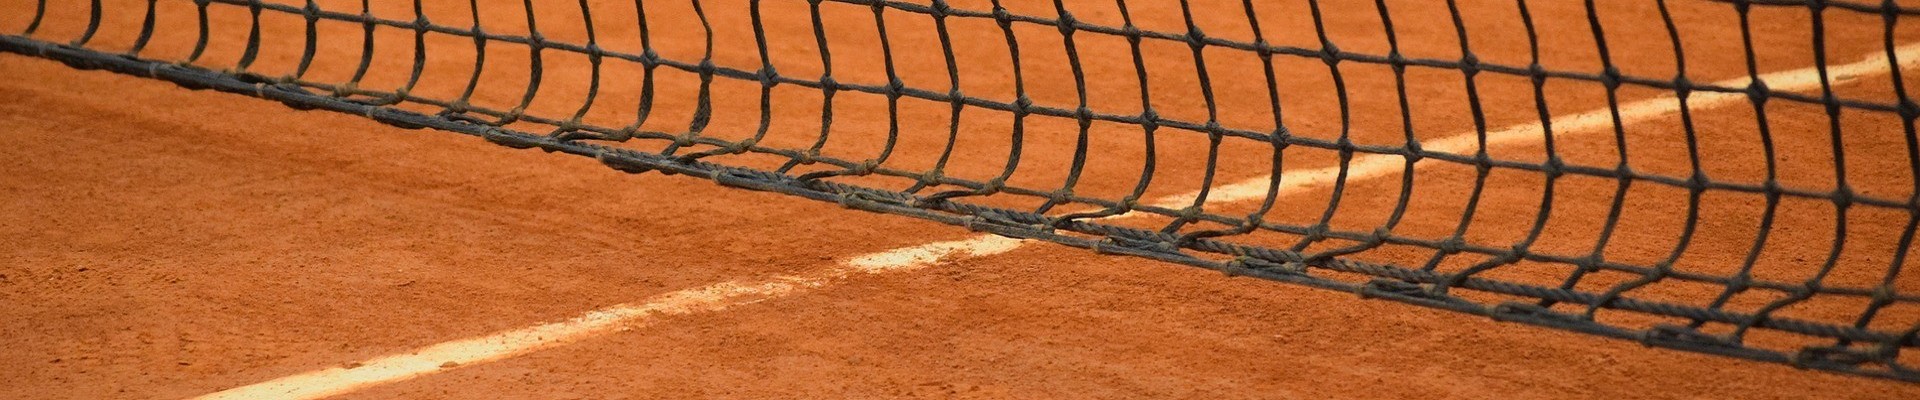 Tennis Sori